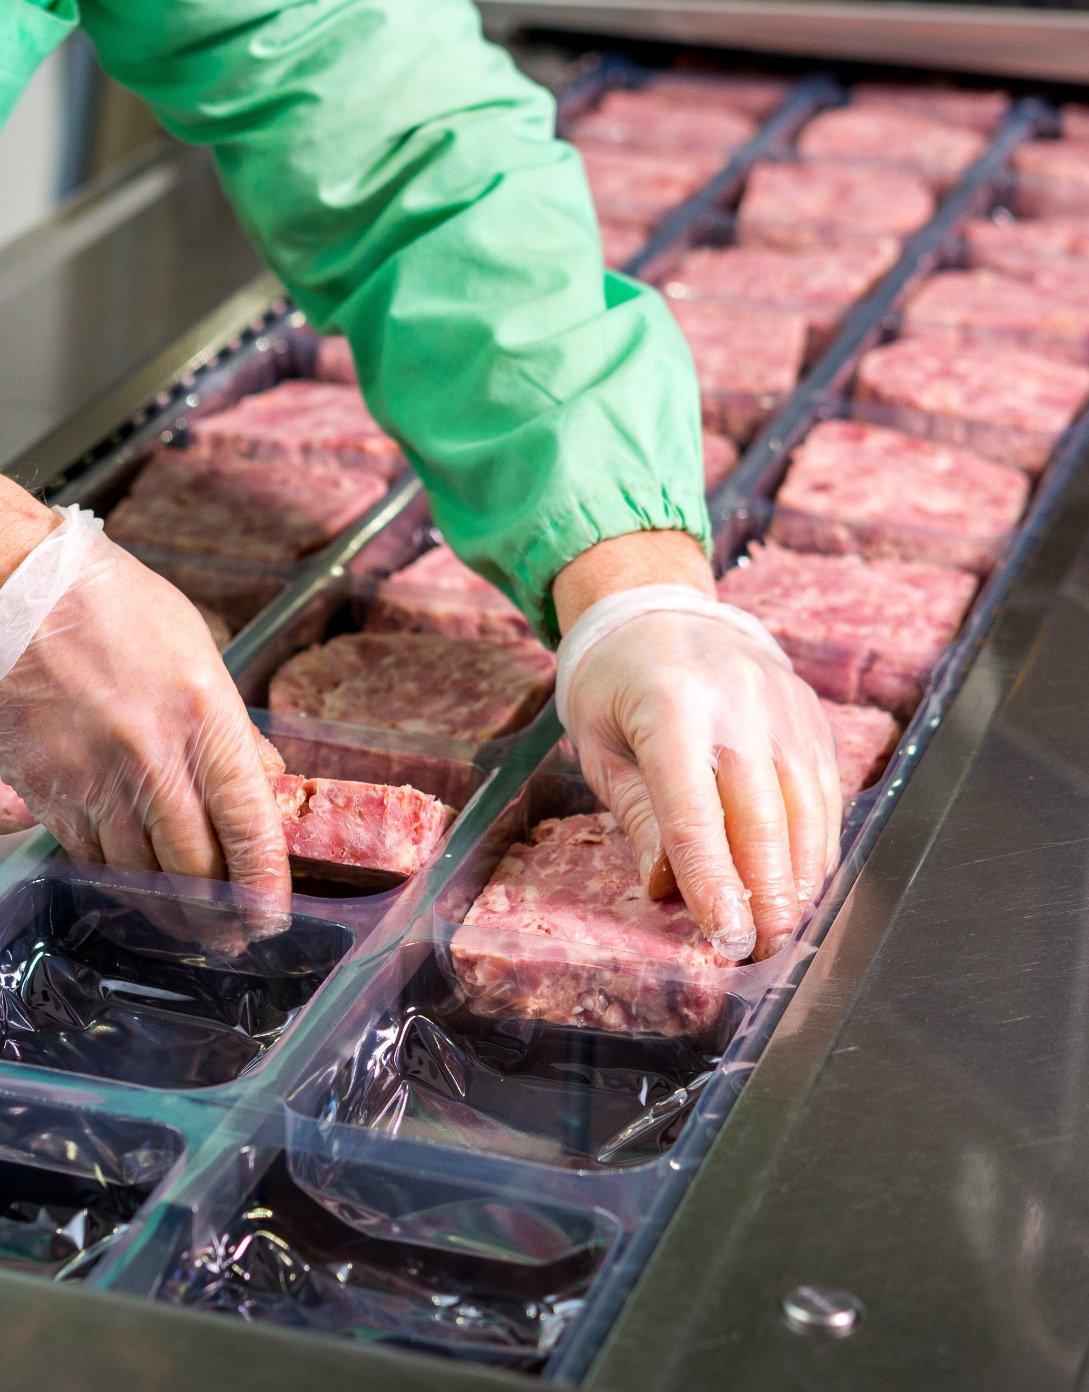 Manufacturing customer preparing Teys meat